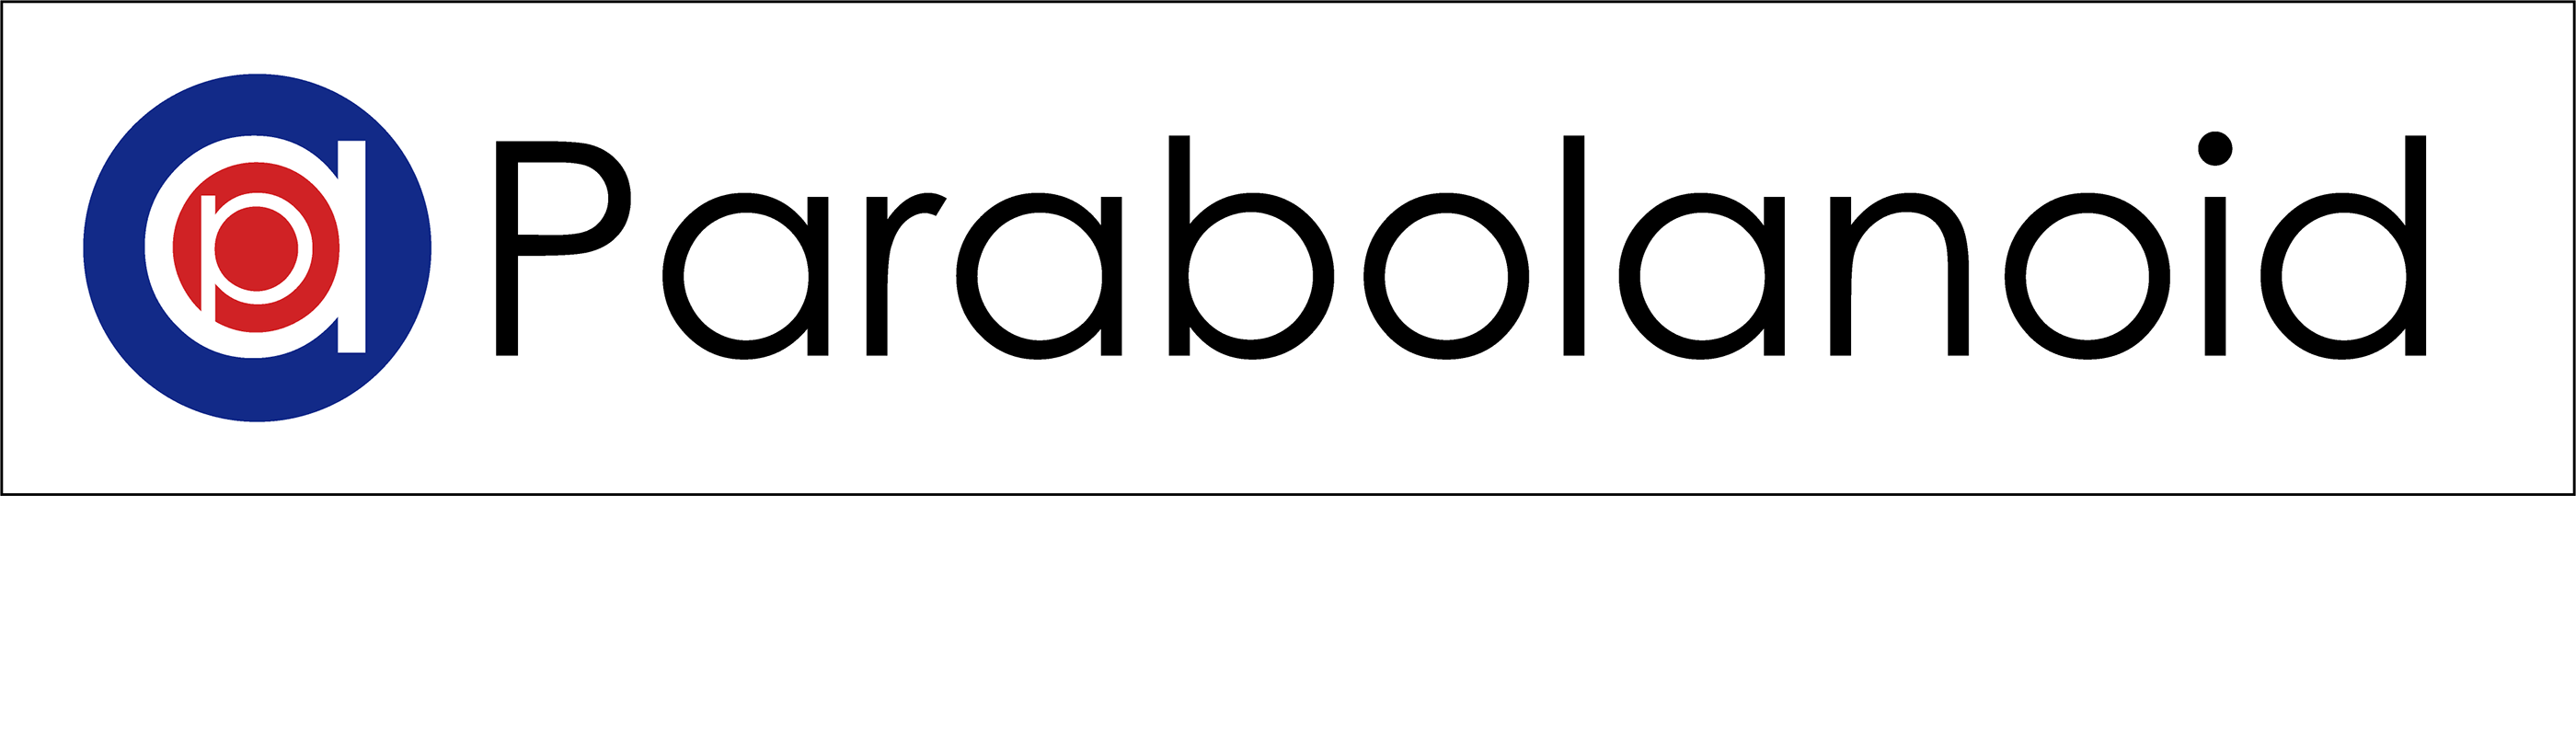 Parabolanoid WEB SHOP